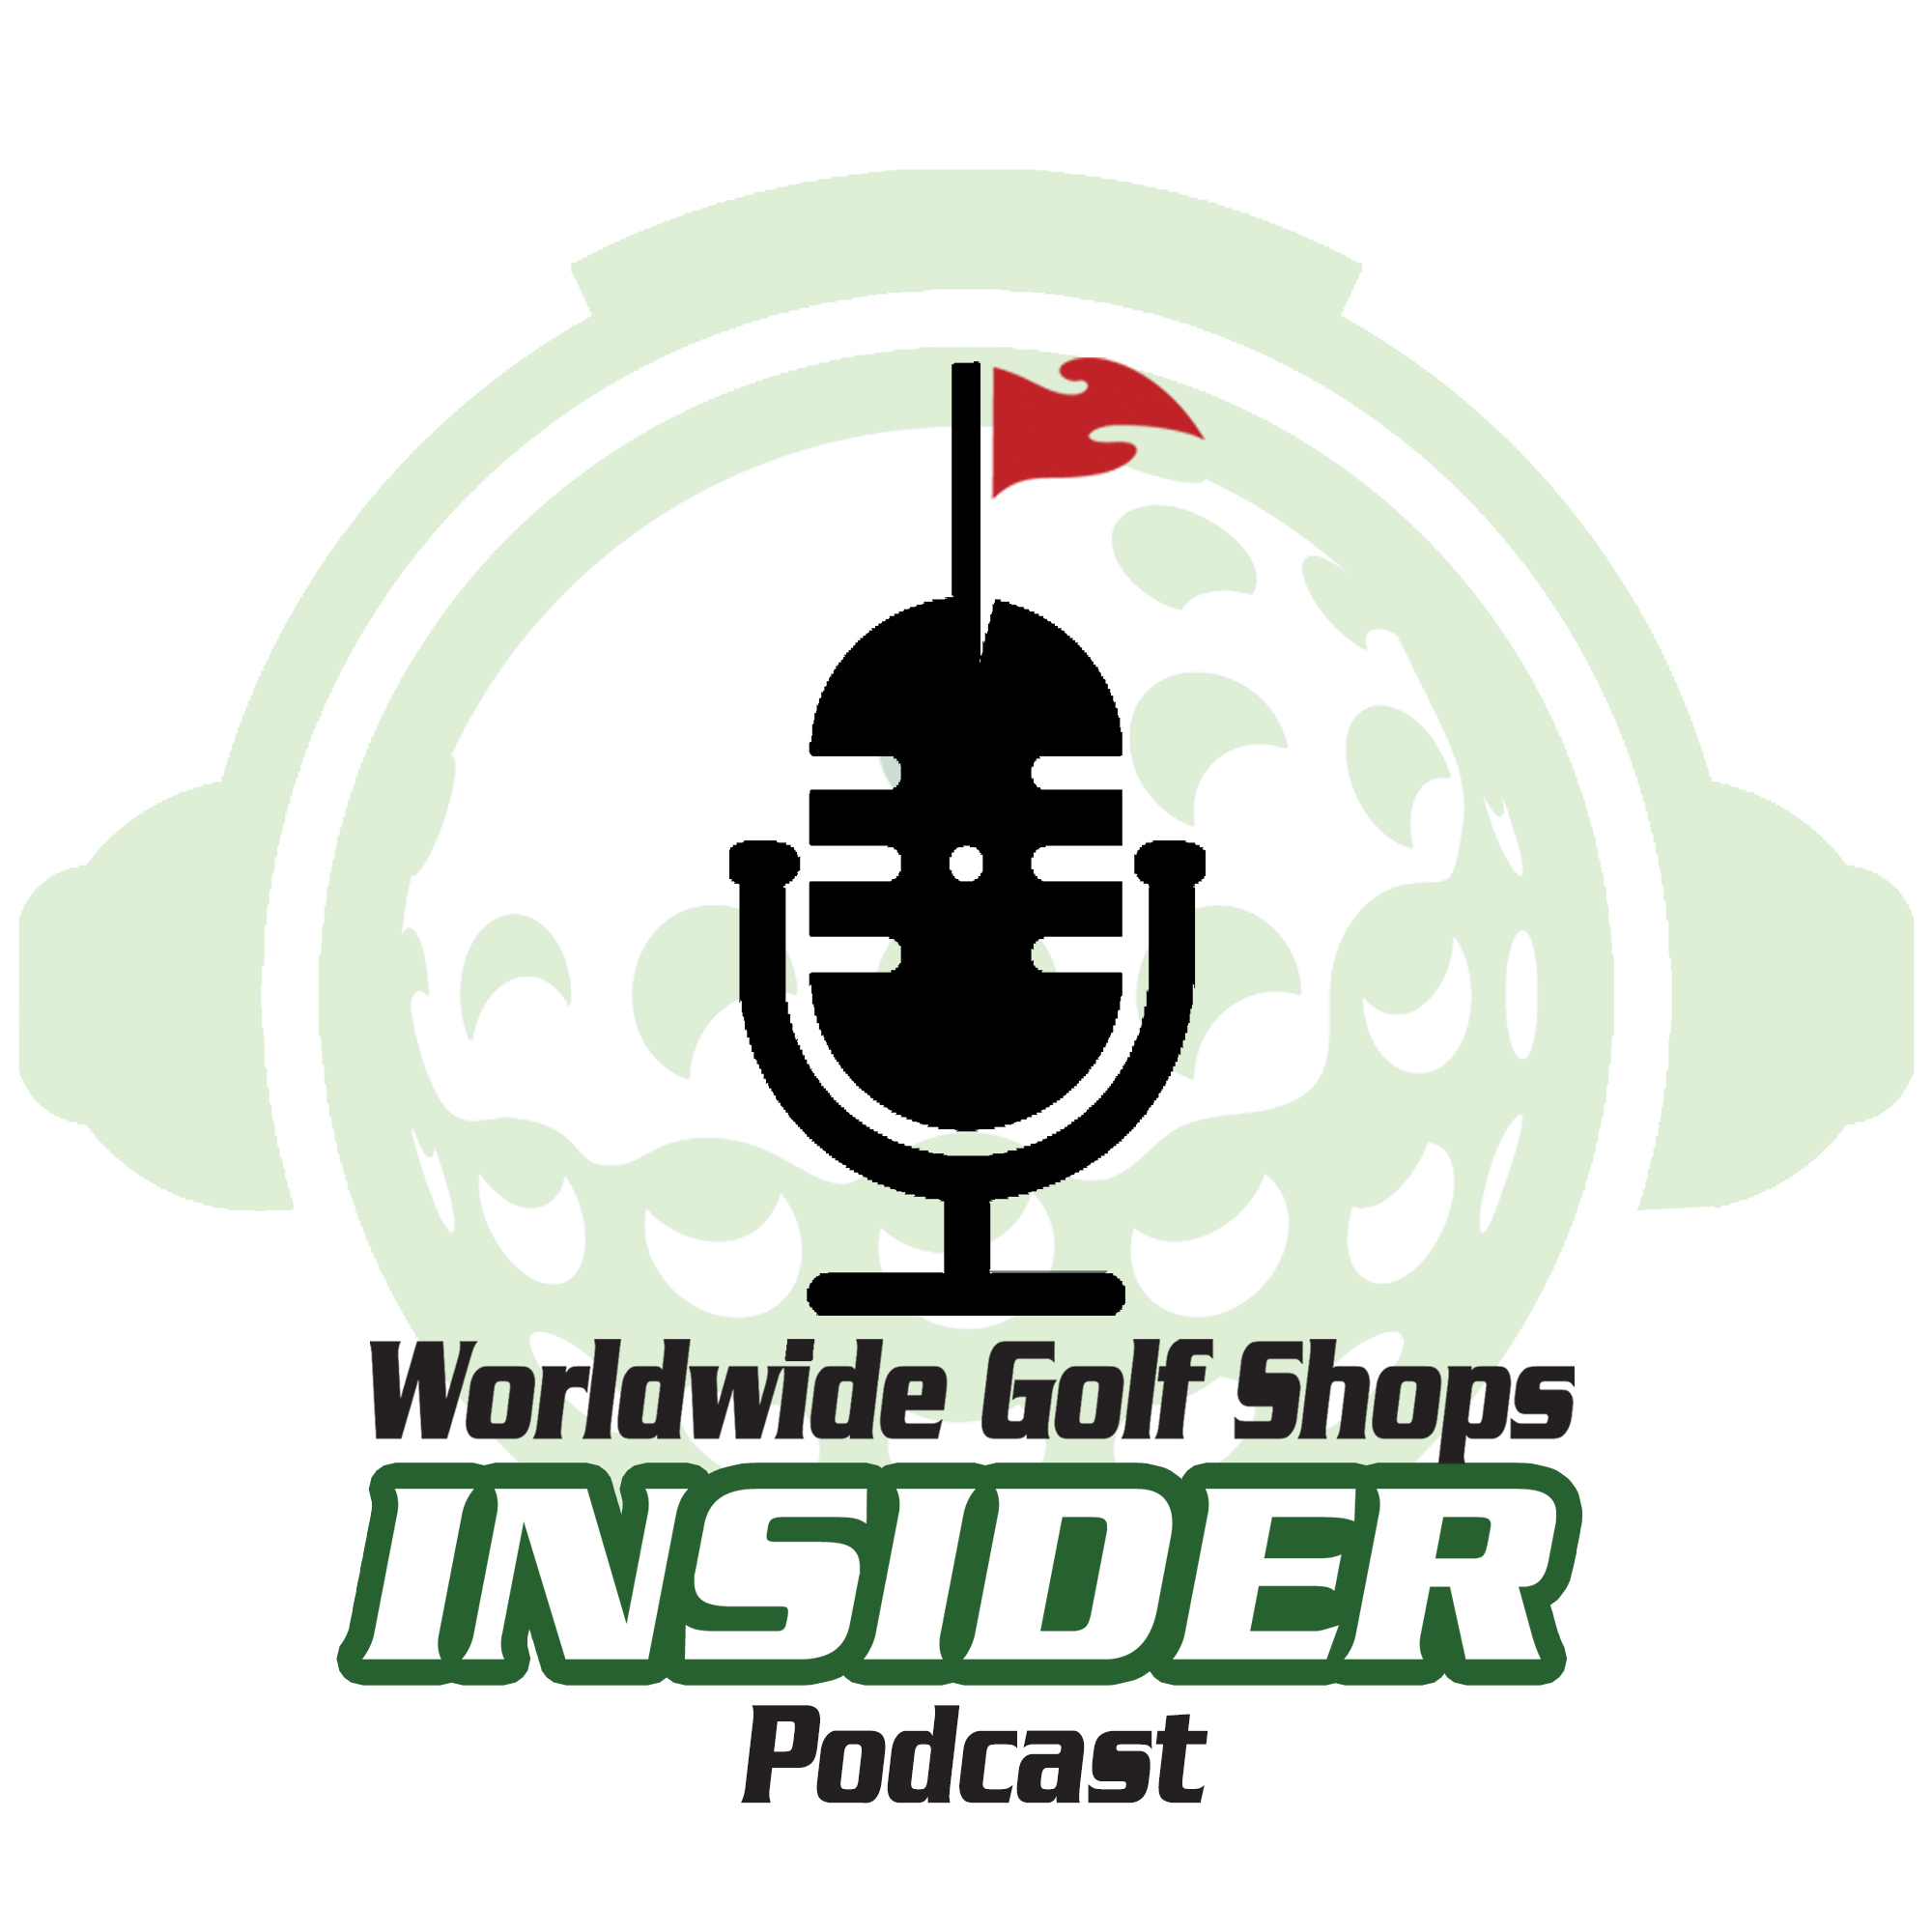 Worldwide Golf Shops Insider Podcast